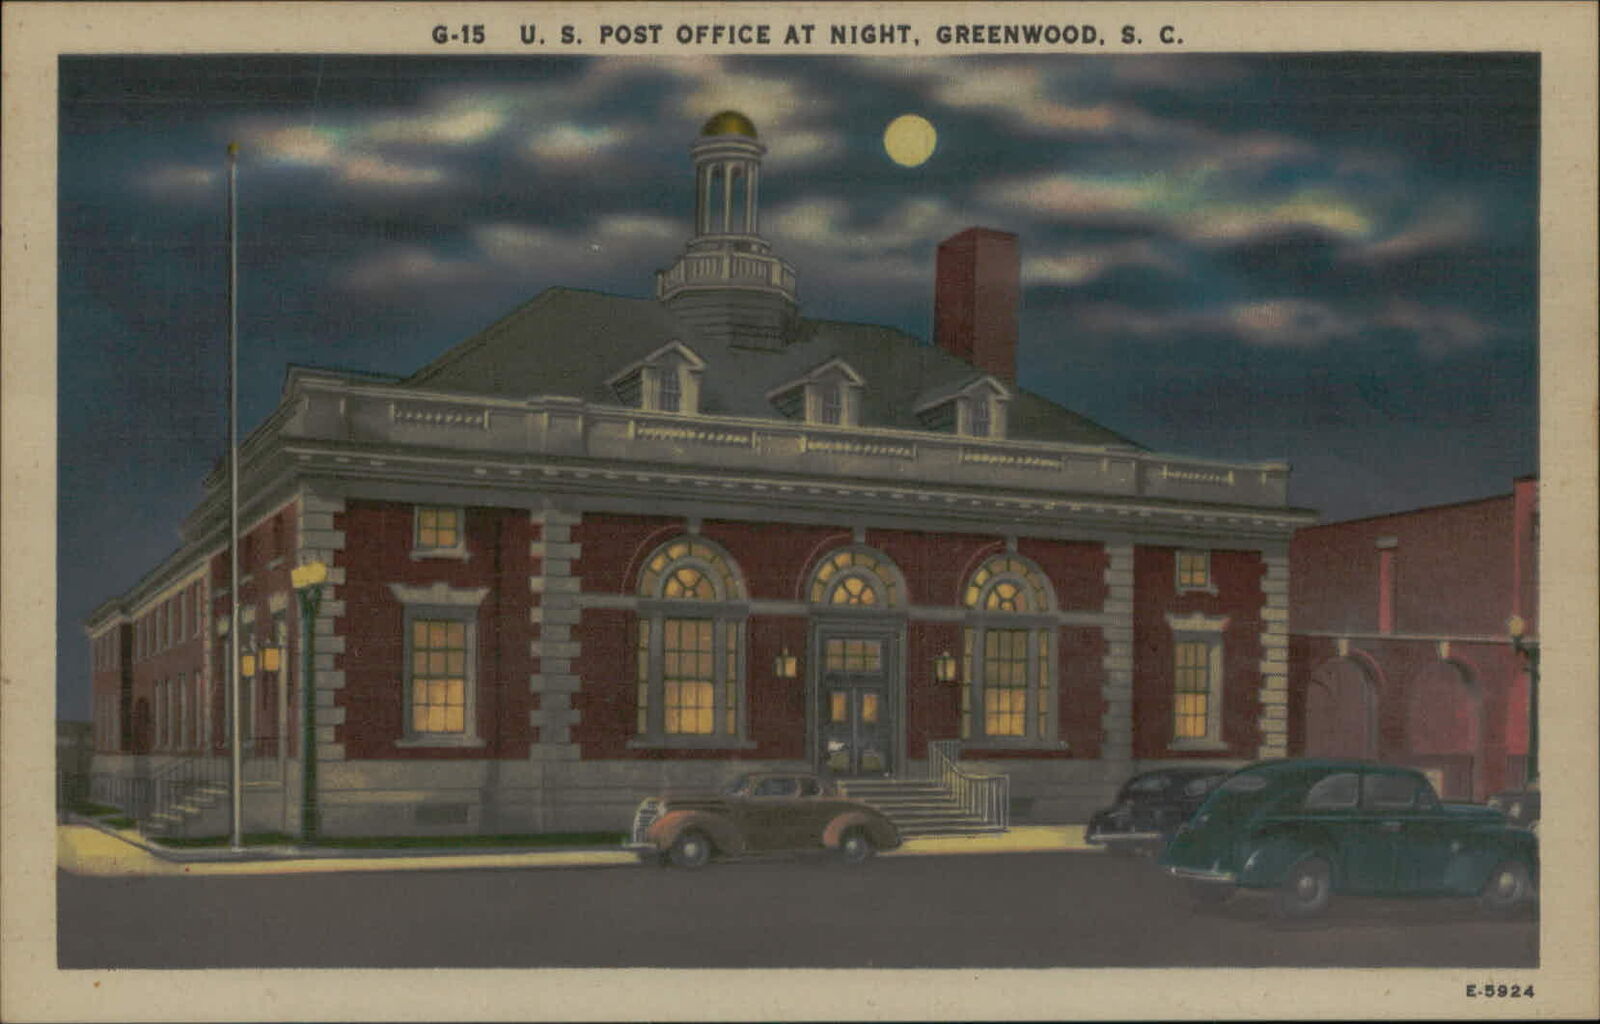 Postcard: G-15 U. S. POST OFFICE AT NIGHT, GREENWOOD. S. C. V E-5924